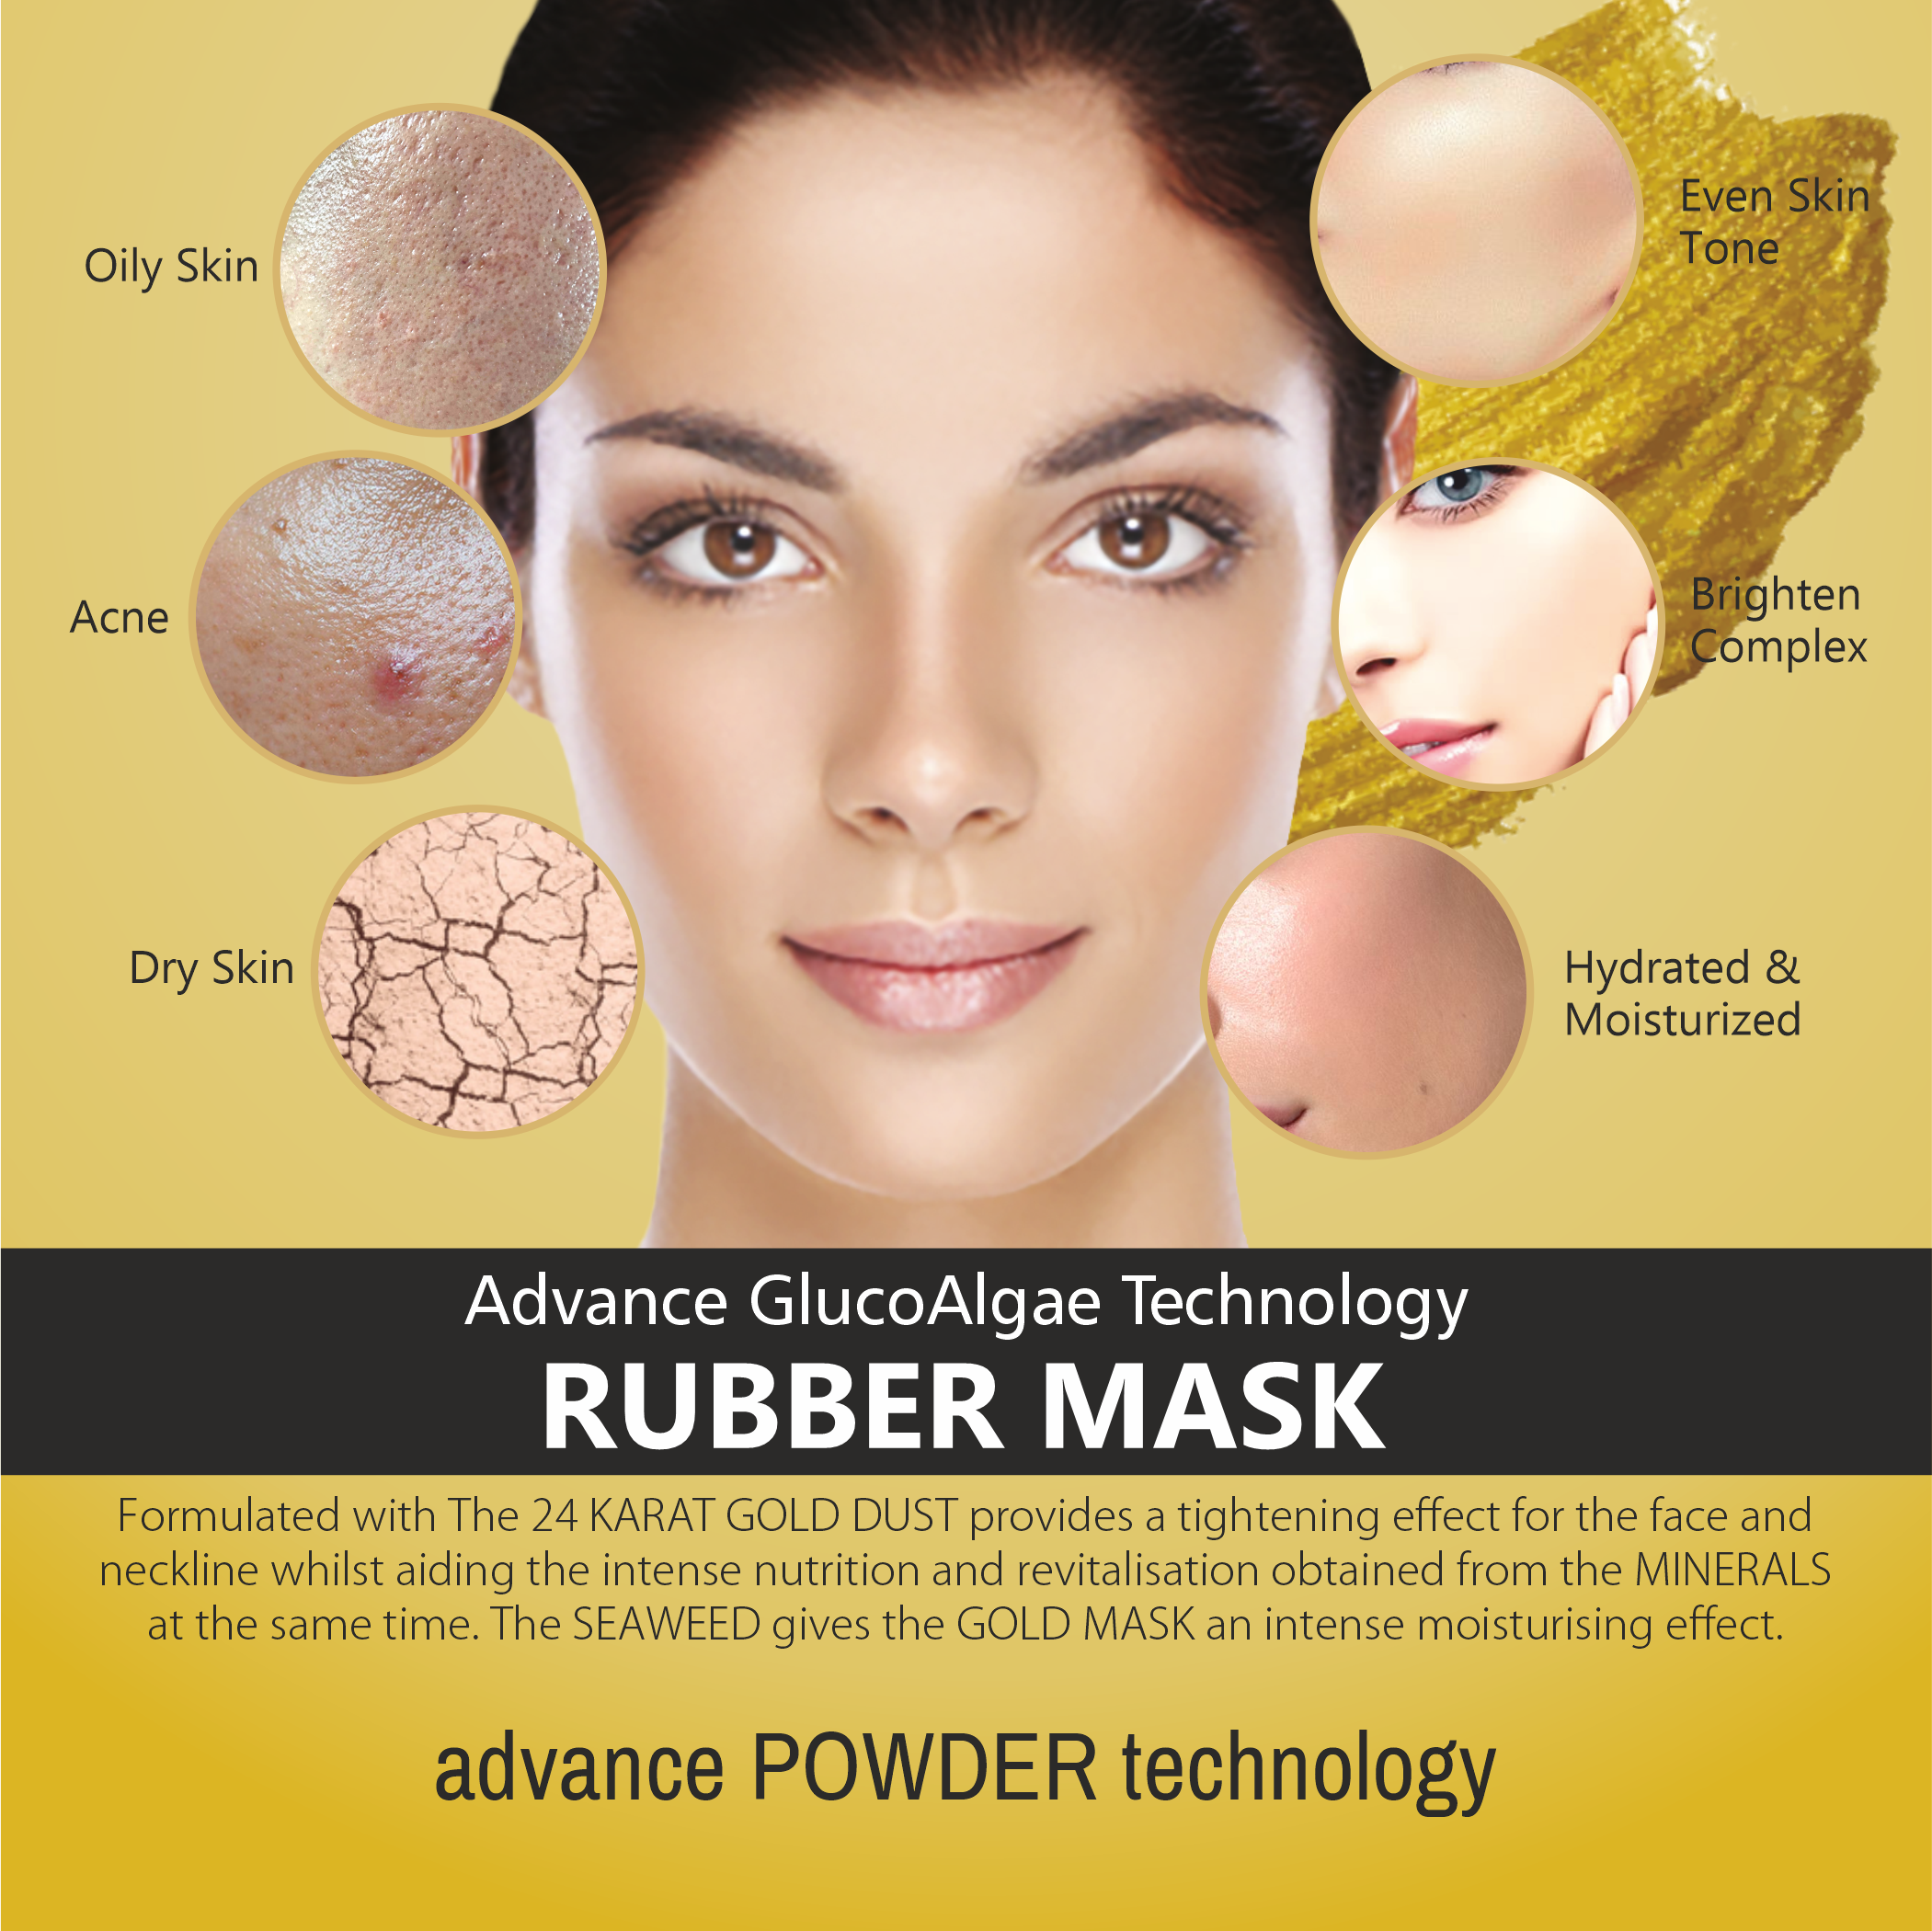 Gold Algae Peel Off Powder Face Mask